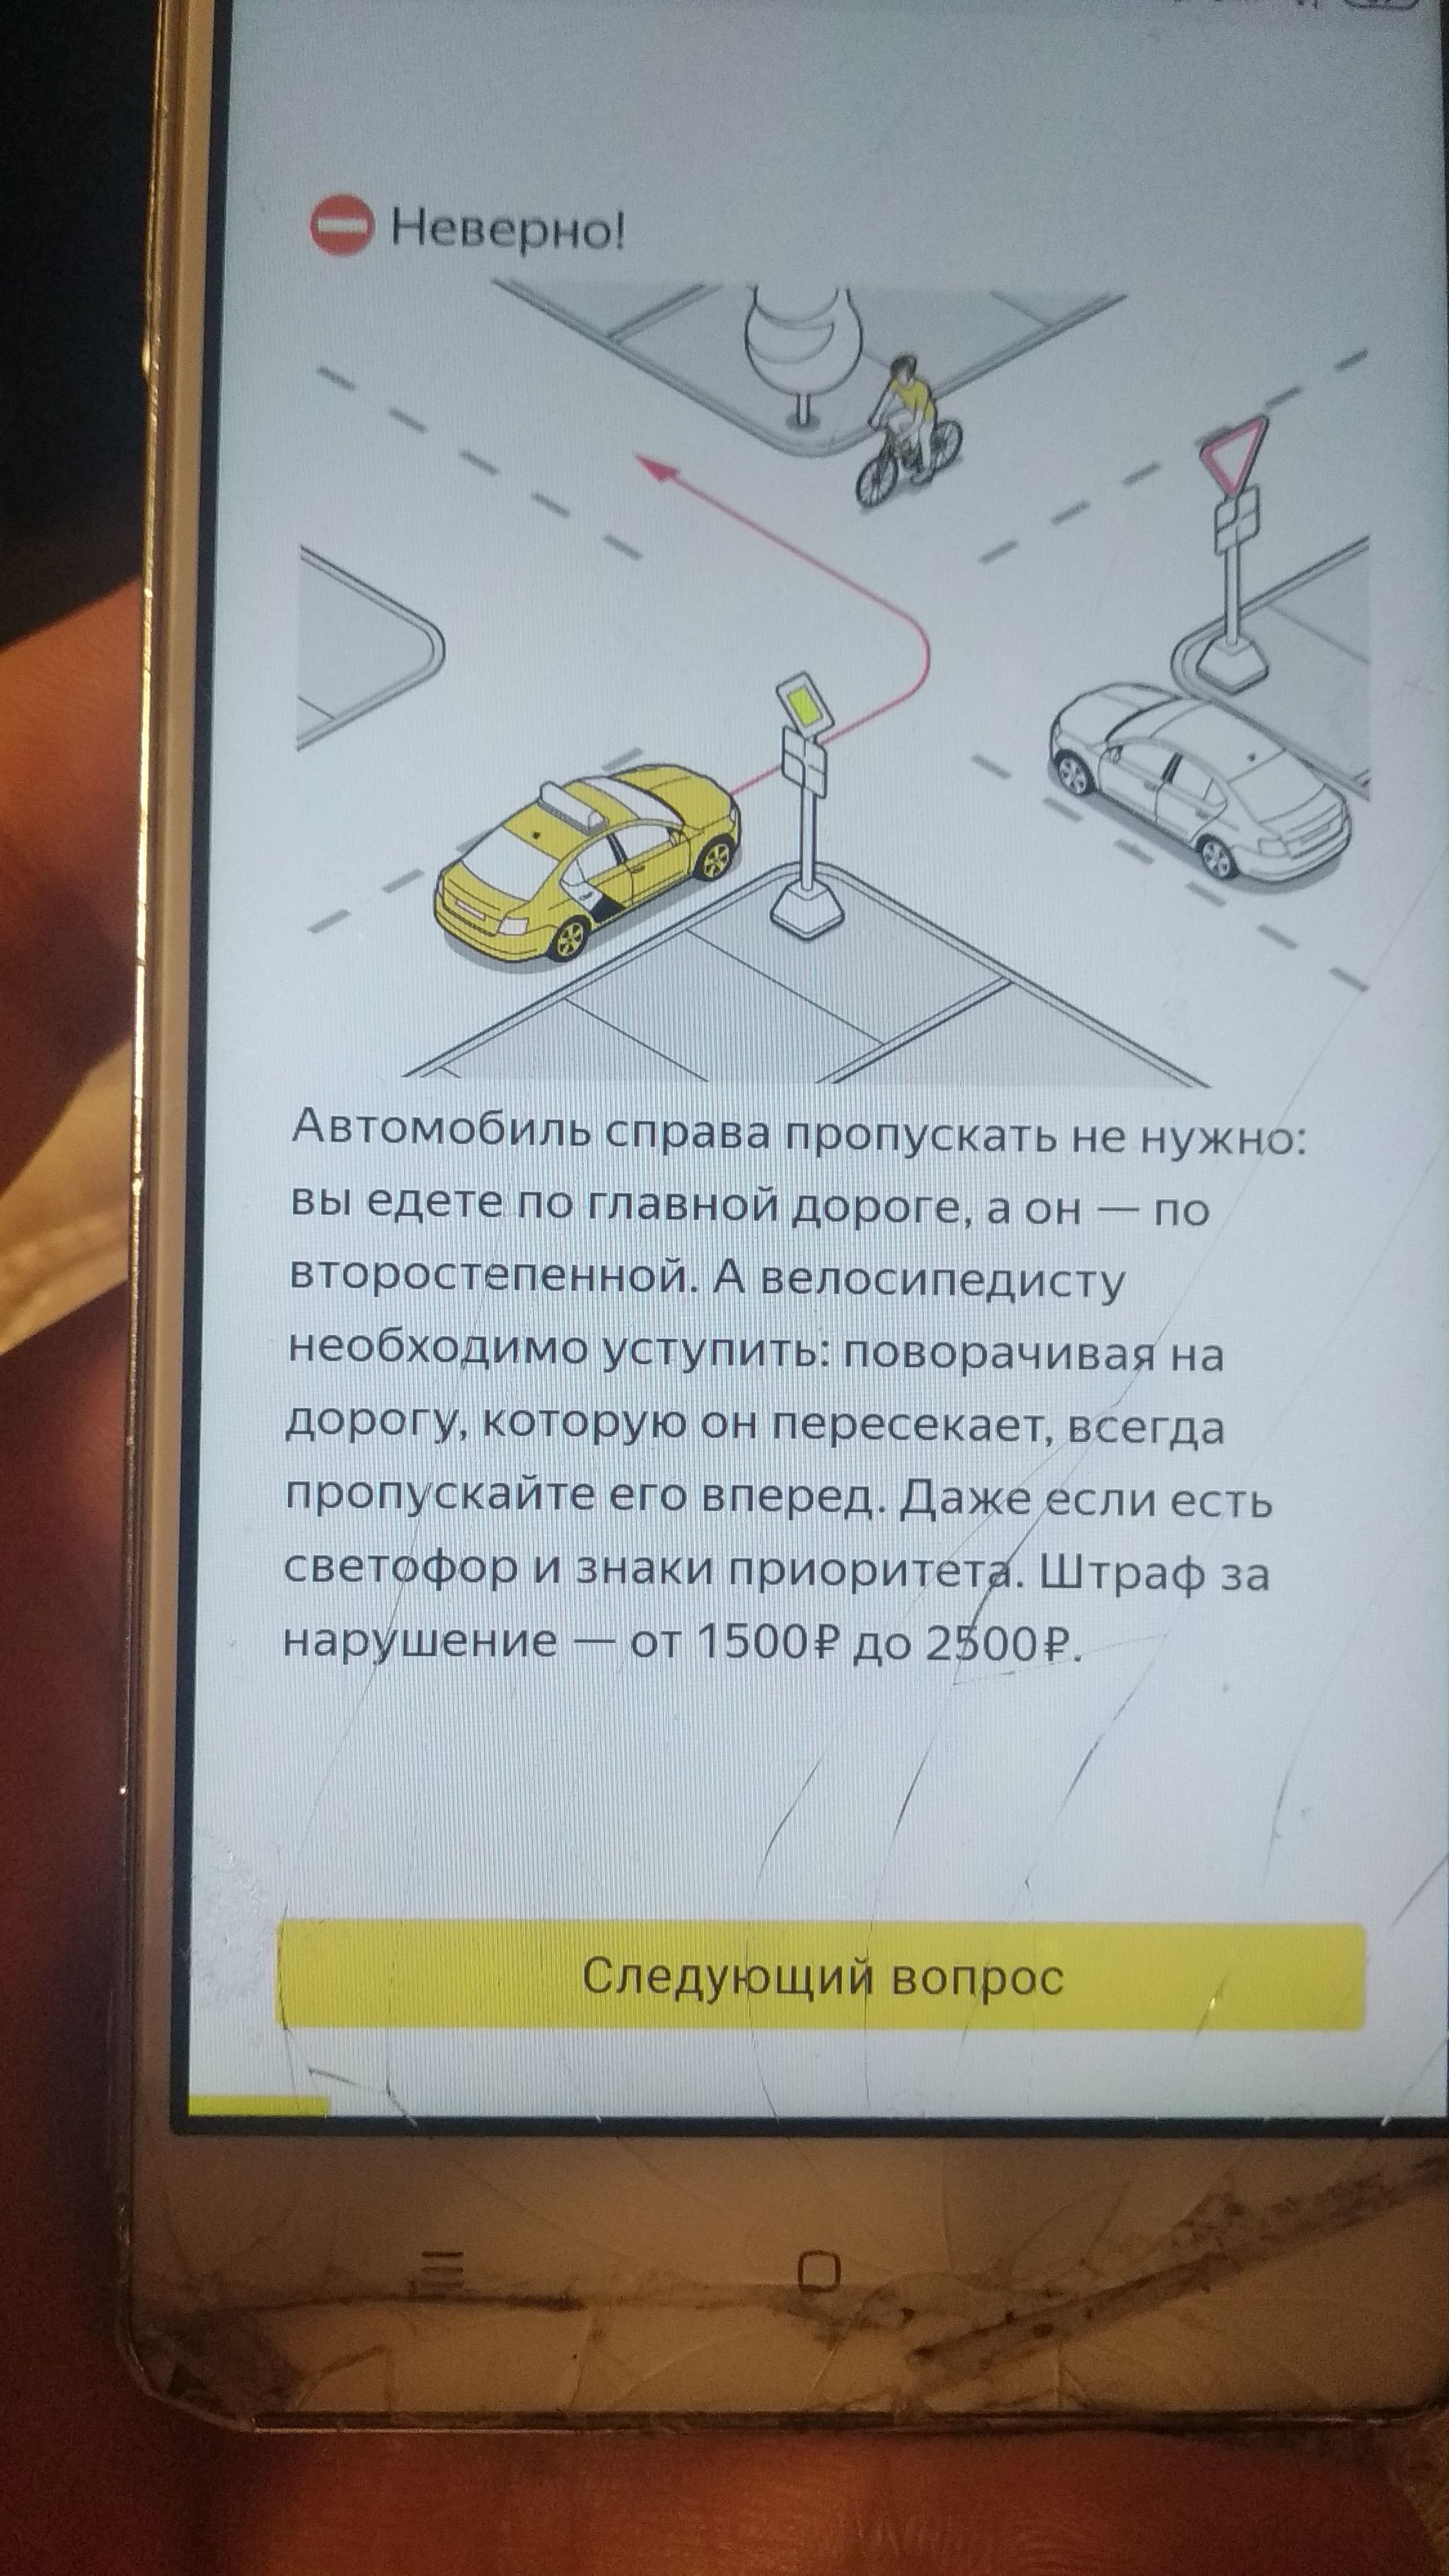 Traffic rules from Yandex - Yandex Taxi, Violation of traffic rules, Marasmus